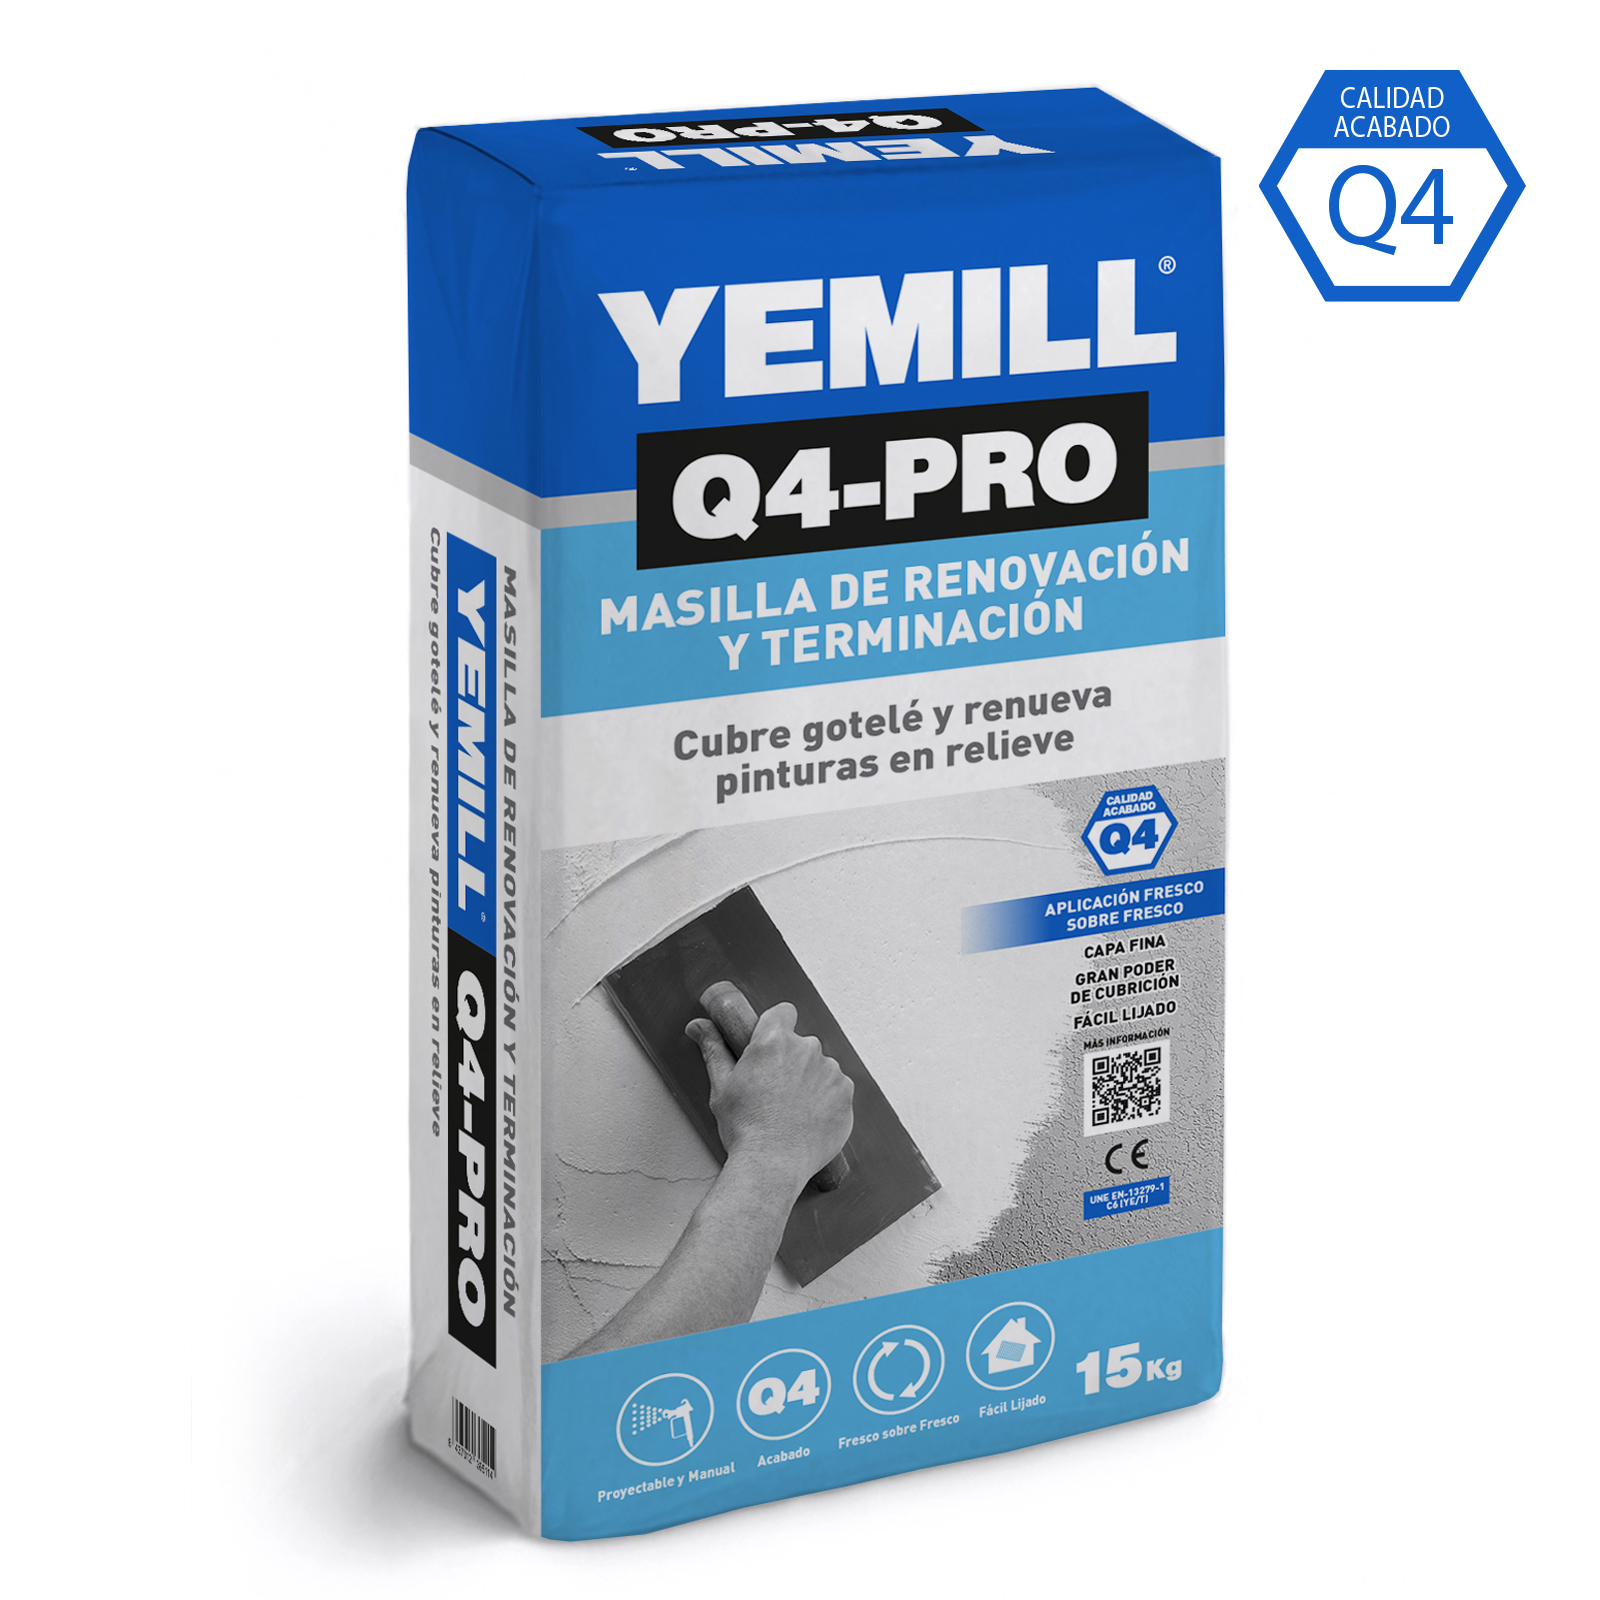 YEMILL Q4-PRO